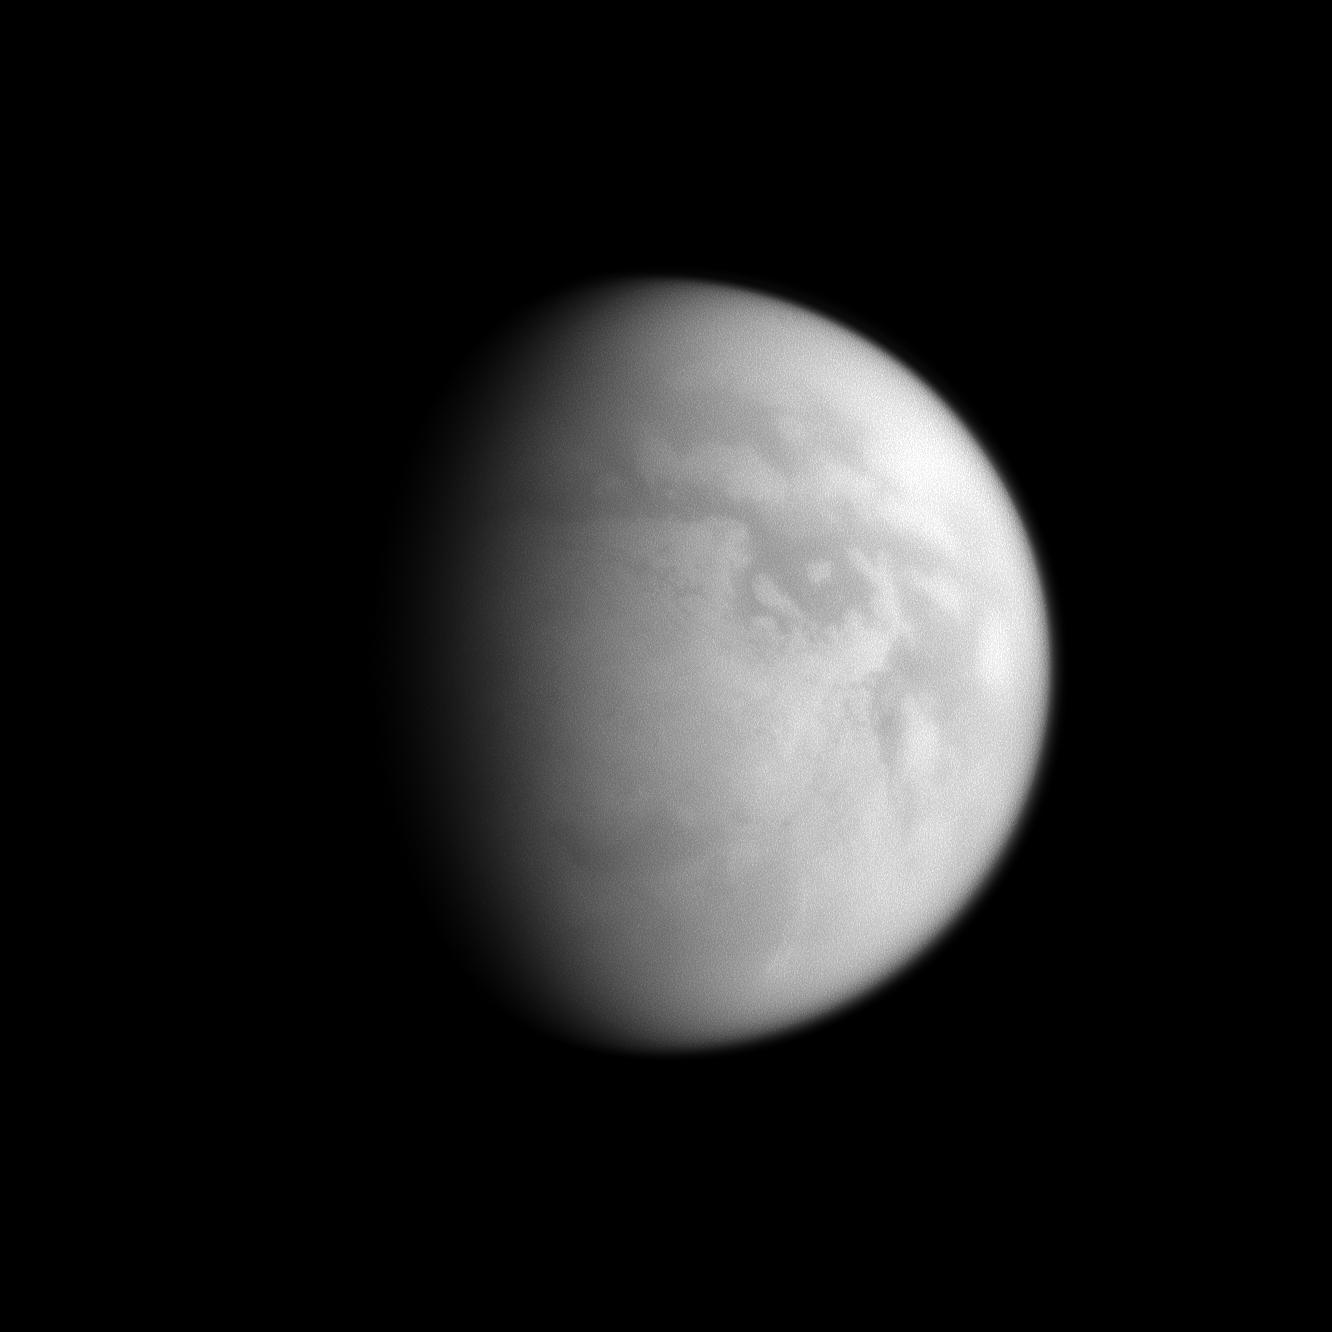 Titan's south polar region